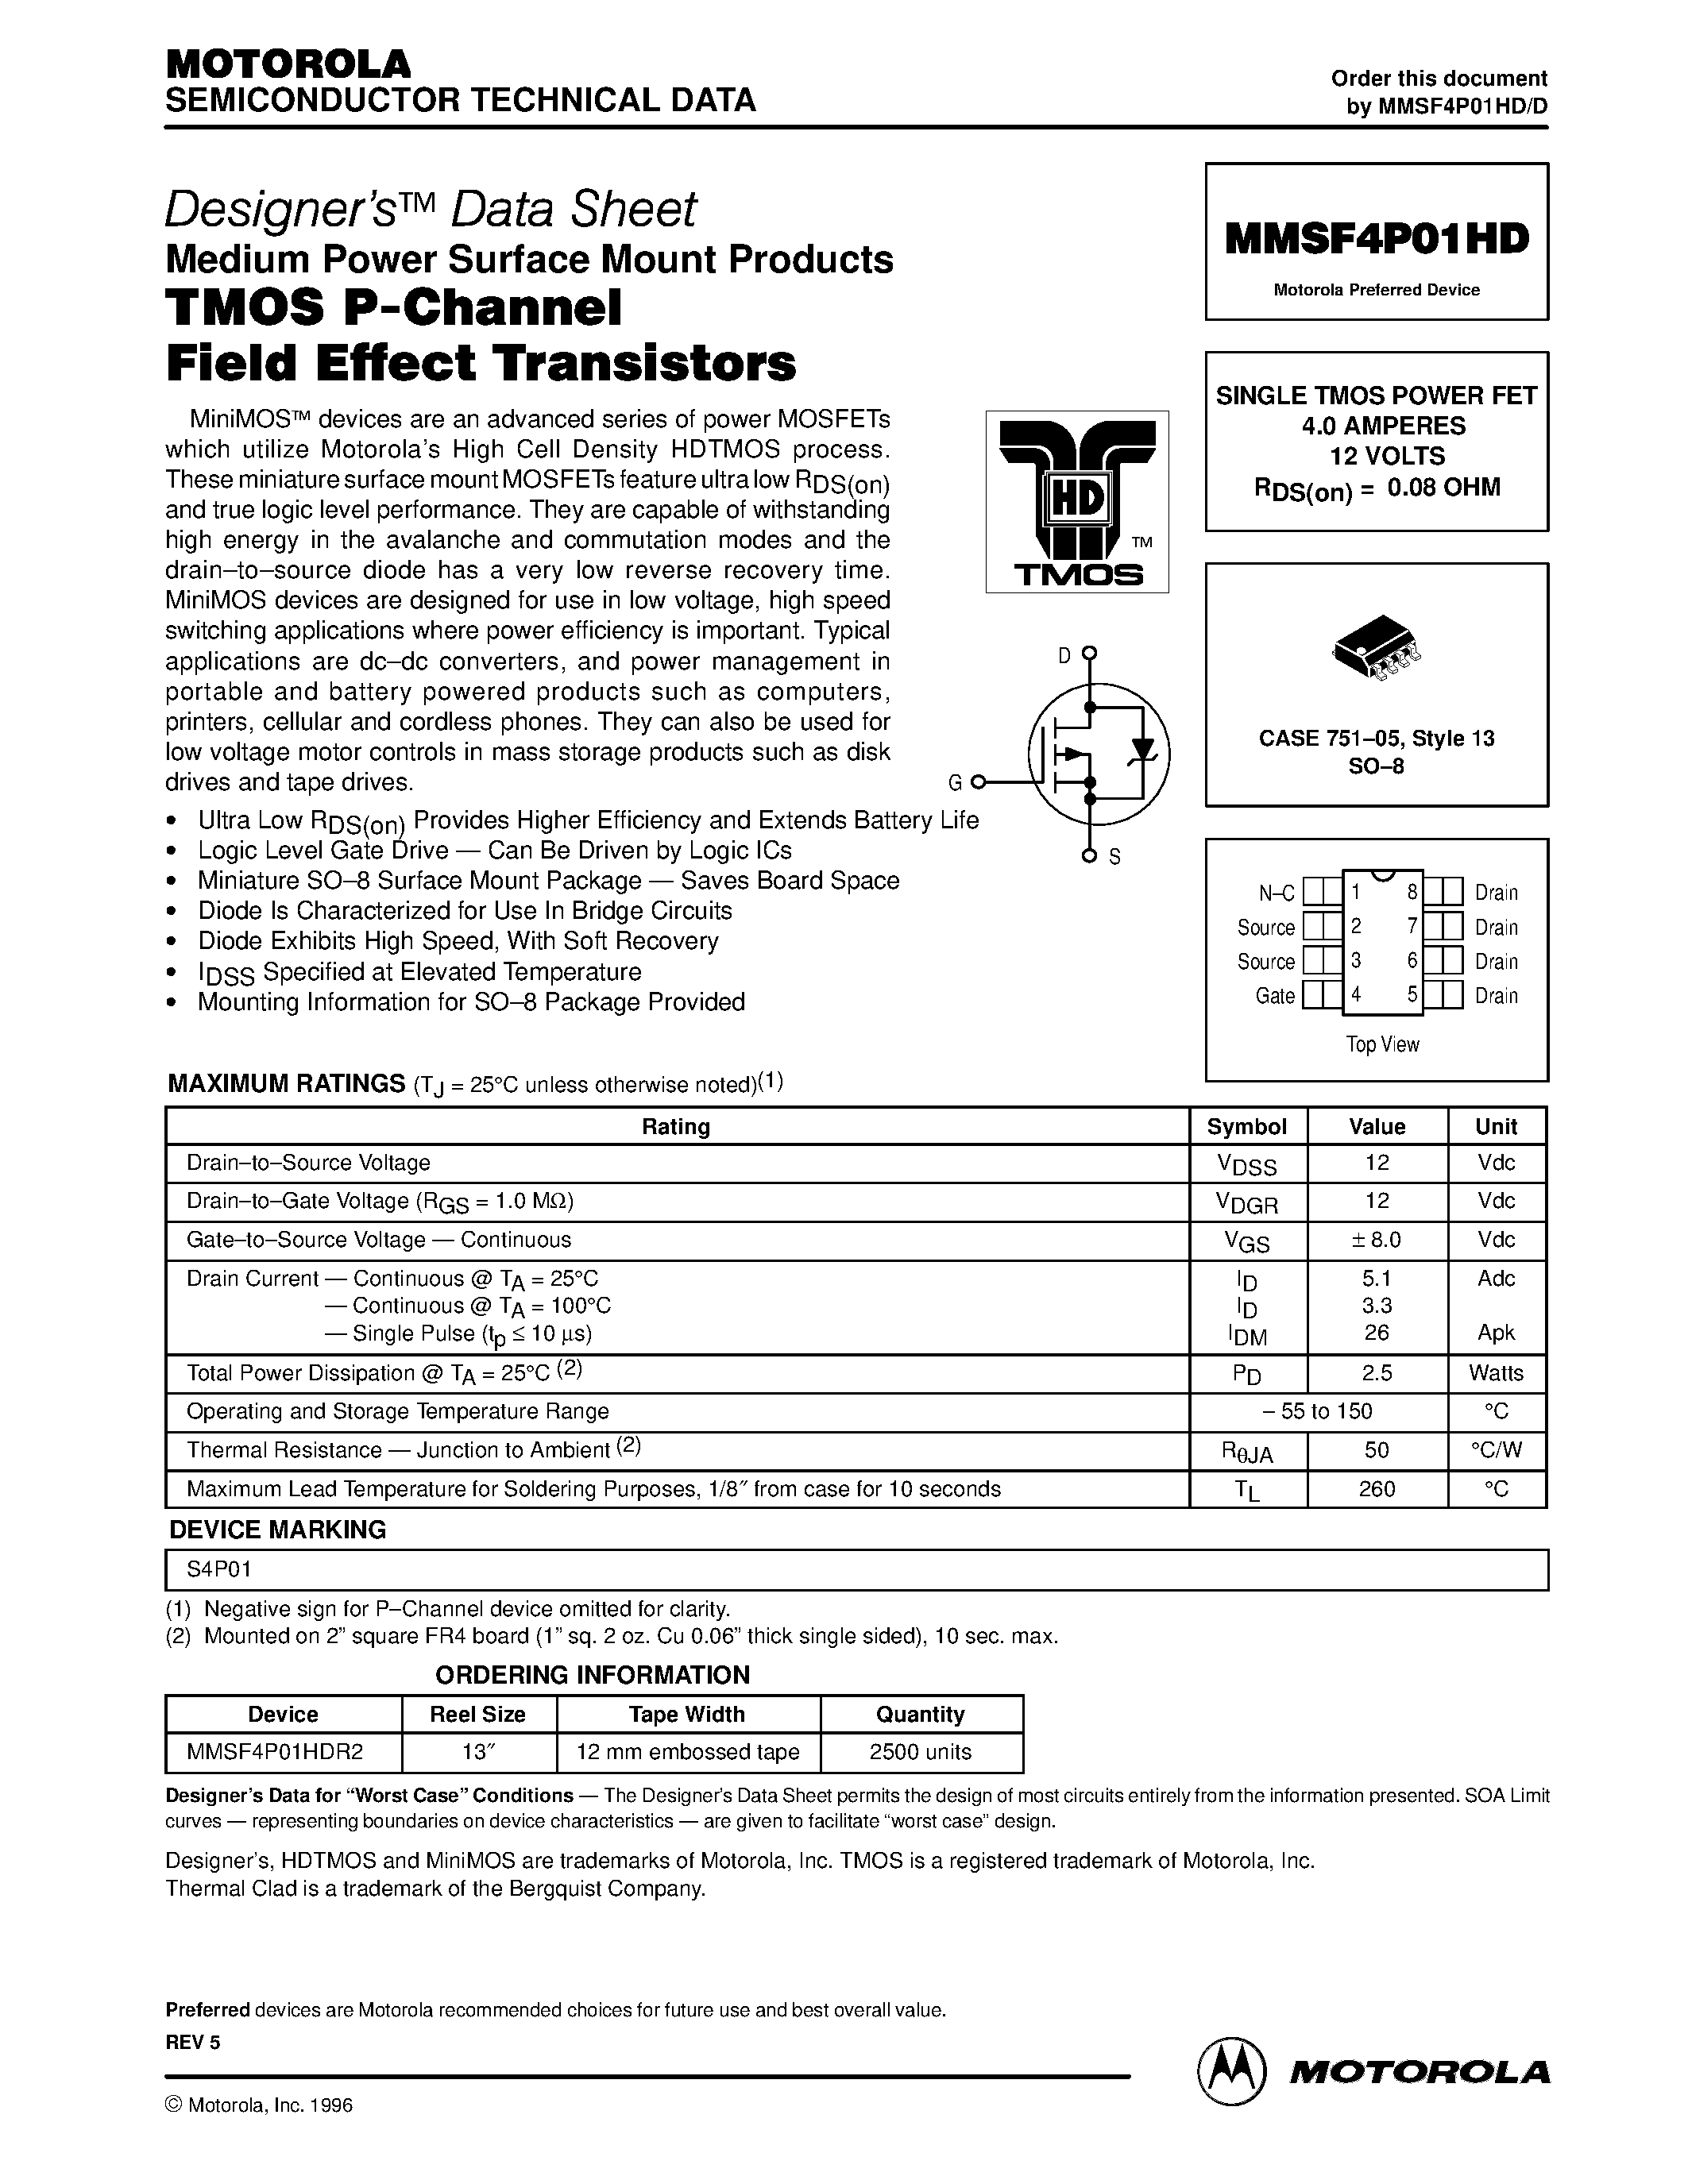 Datasheet MMSF4P01HD - SINGLE TMOS POWER FET 4.0 AMPERES 12 VOLTS page 1